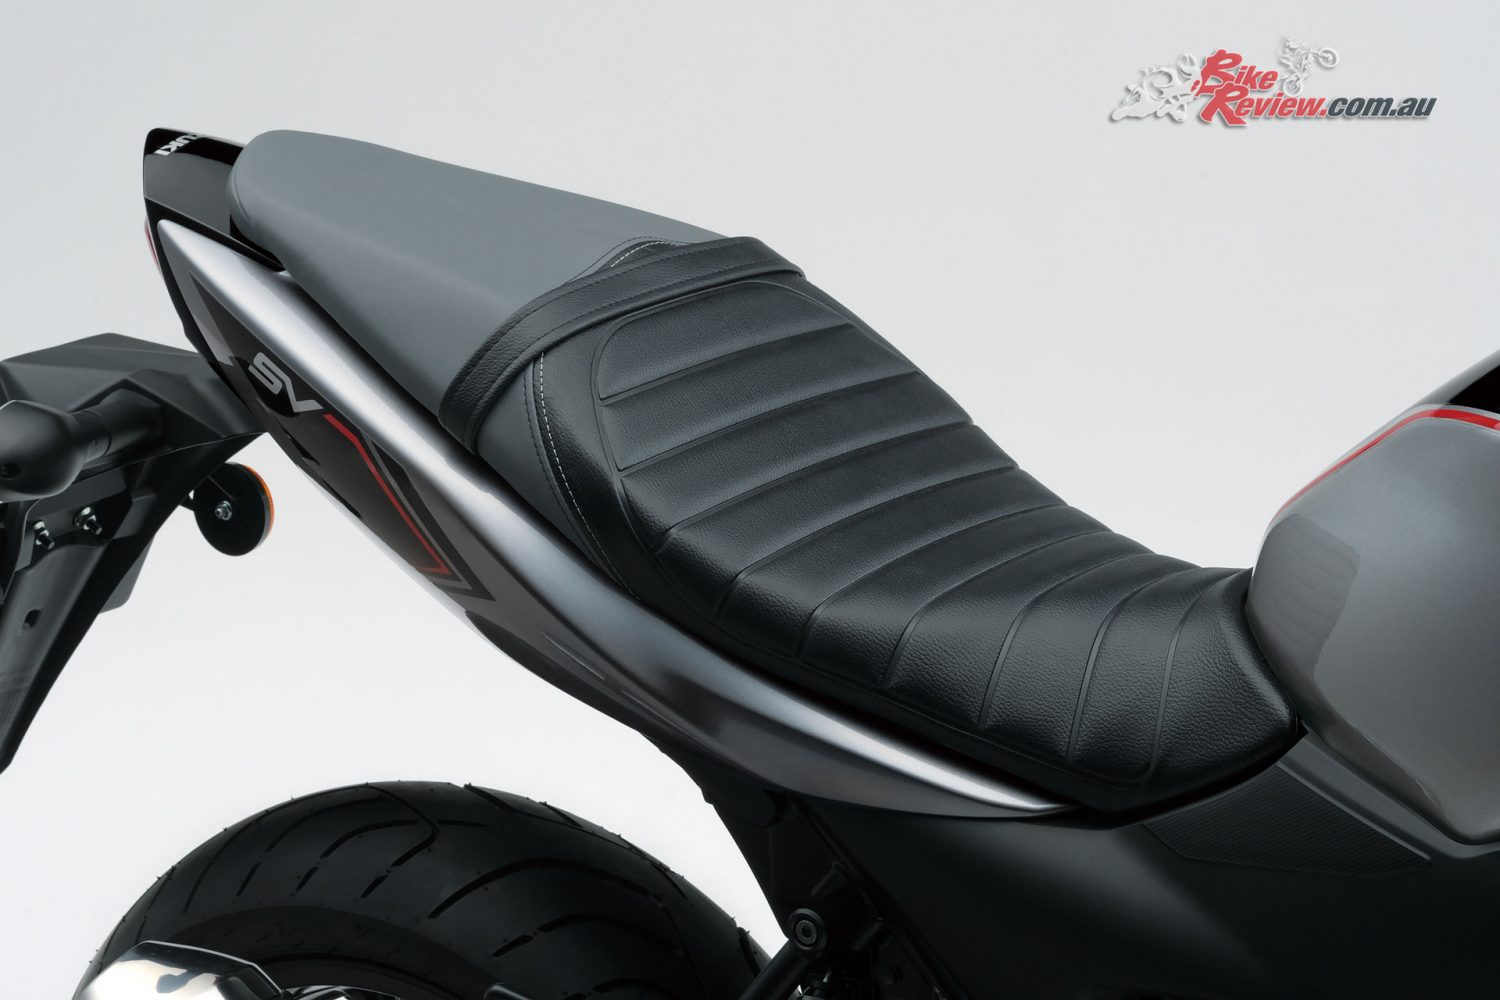 Suzuki unveil 2018 SV650X Cafe Racer at EICMA - Bike Review